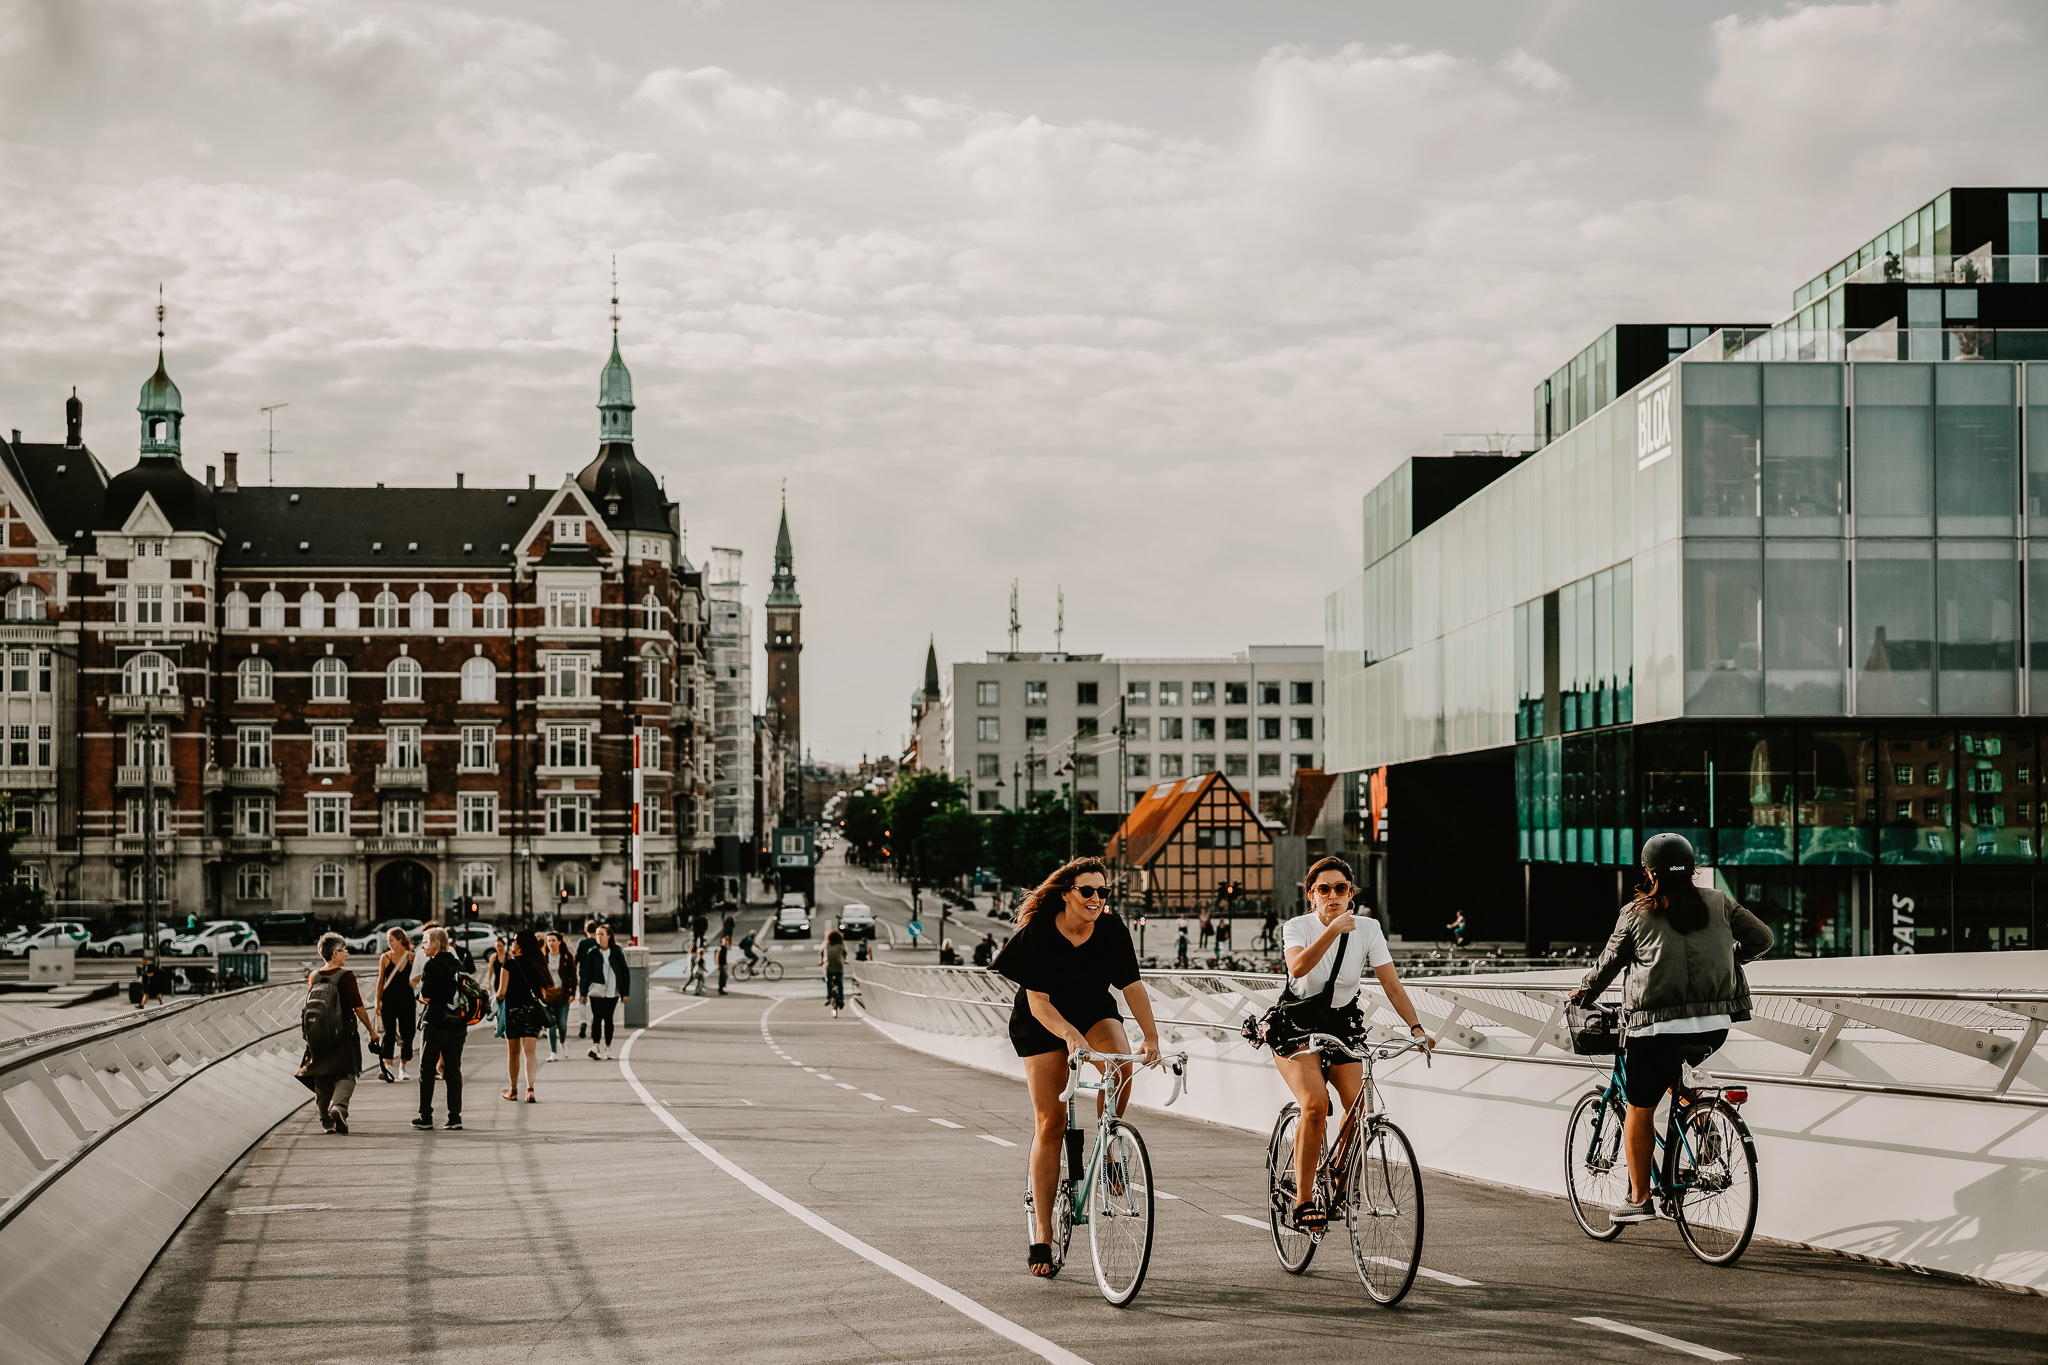 3 cyclists biking in a bike lane in Copenhagen, with pedestrians in the background.